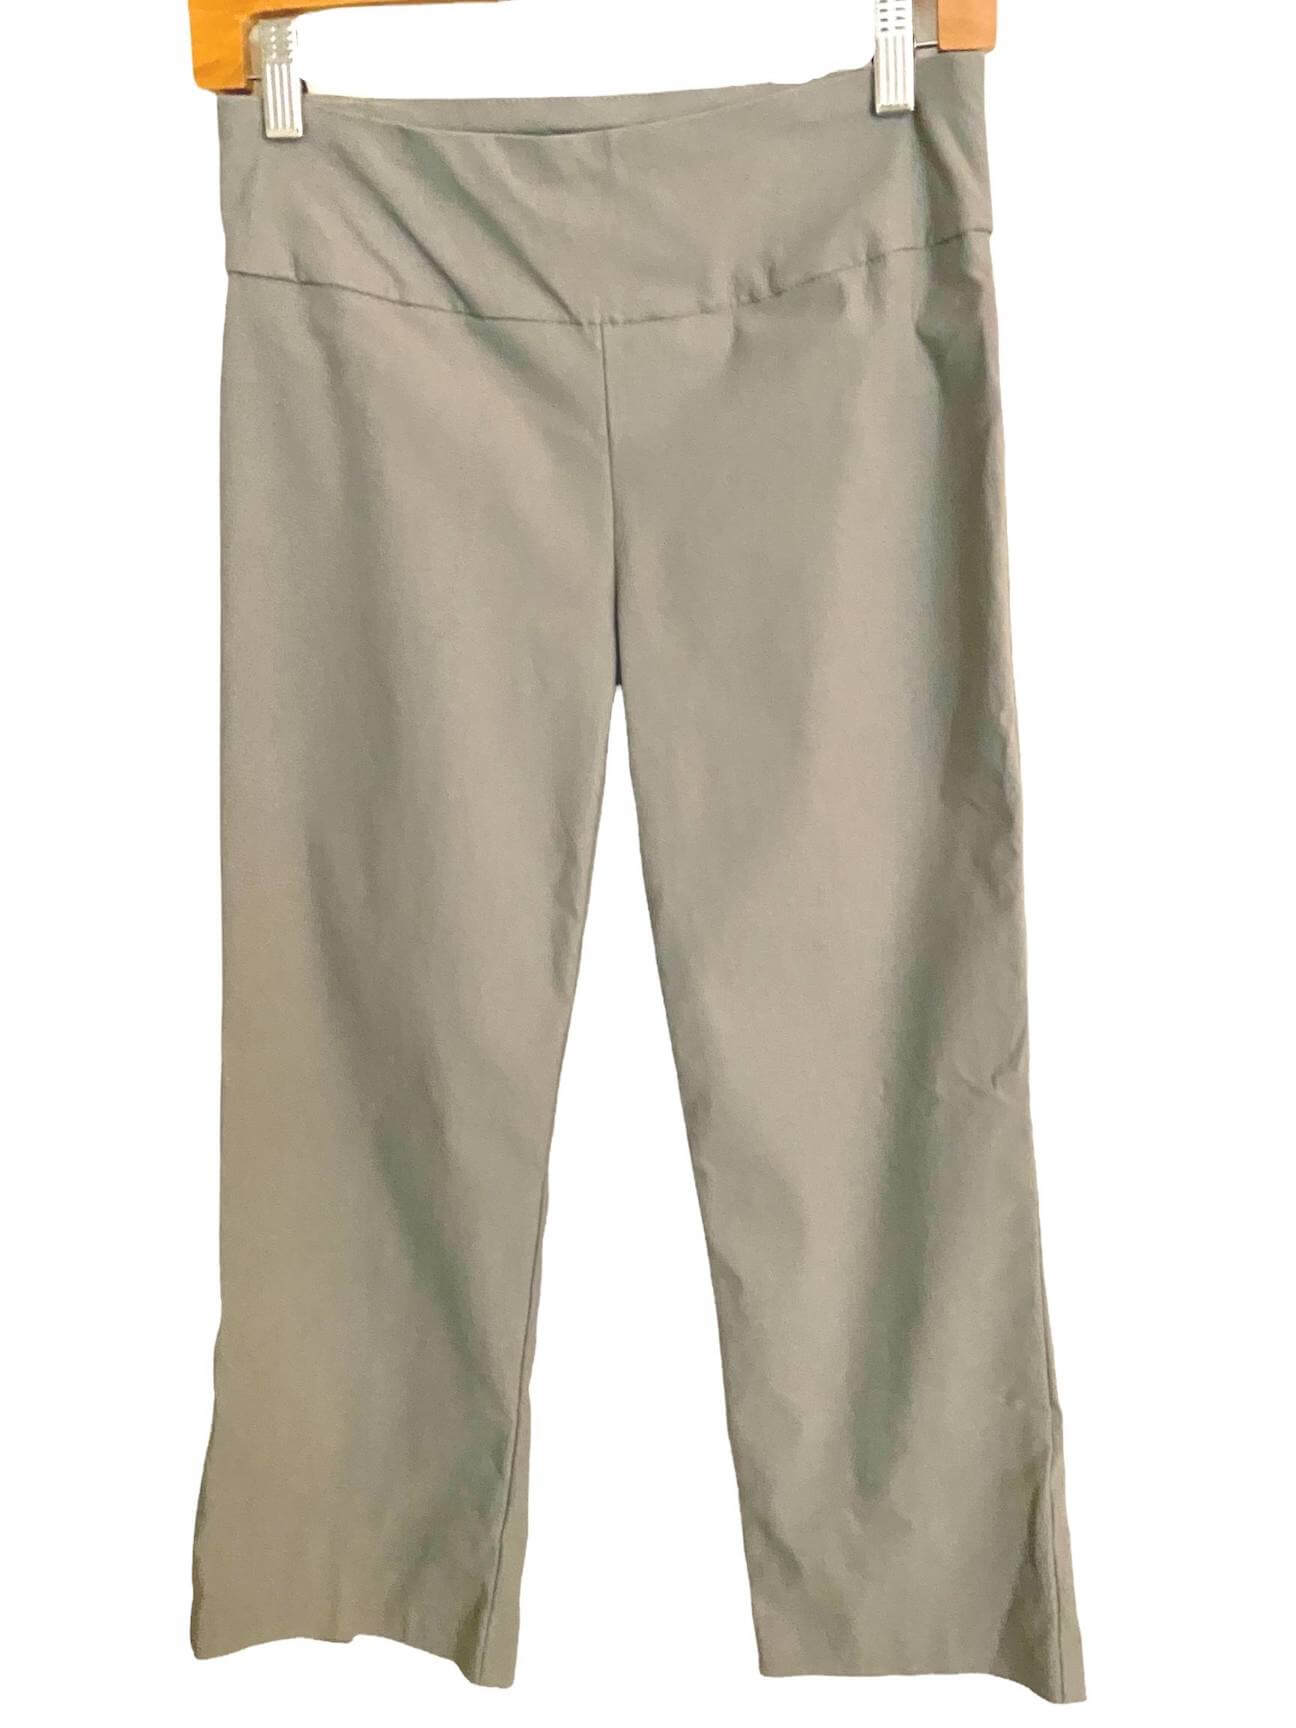 Soft Summer TRIBAL khaki crop pants